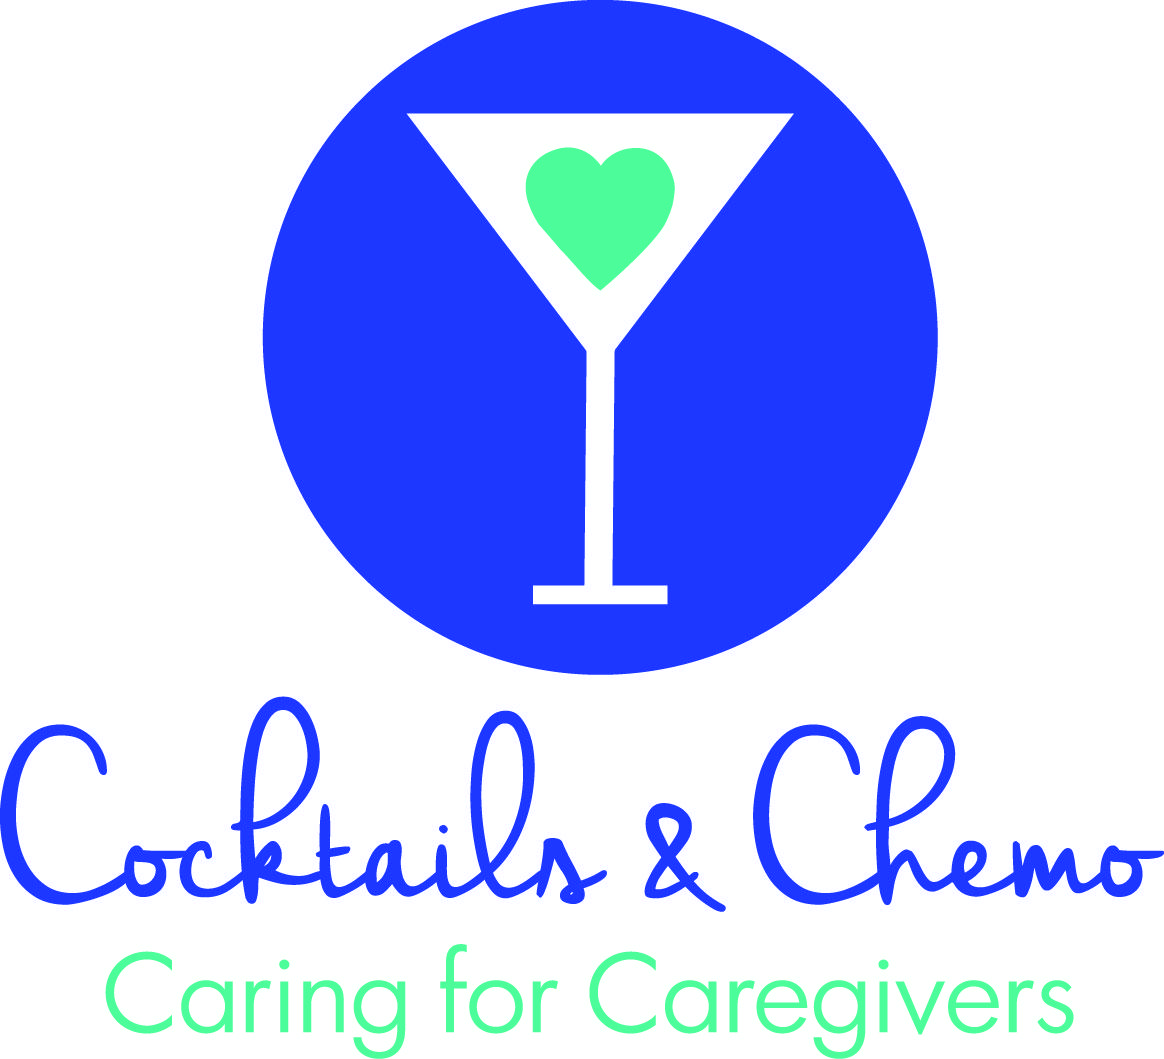 Chemo Logo - Home. Cocktails and Chemo